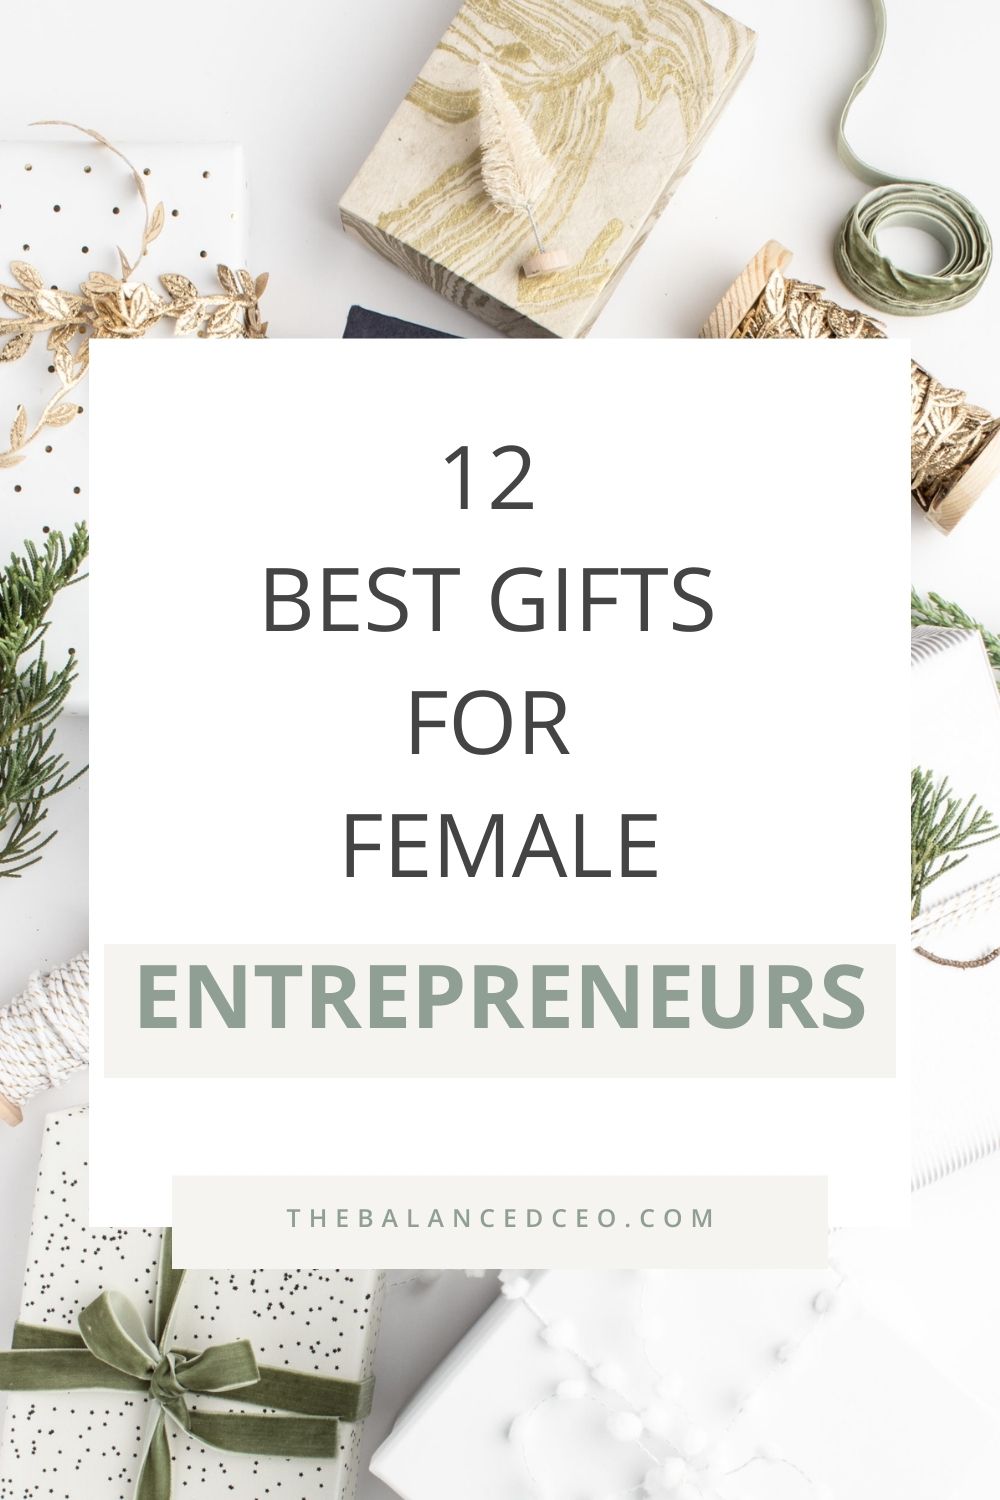 https://thebalancedceo.com/wp-content/uploads/2020/11/12-Best-Gifts-for-Entrepreneurs-1.jpg